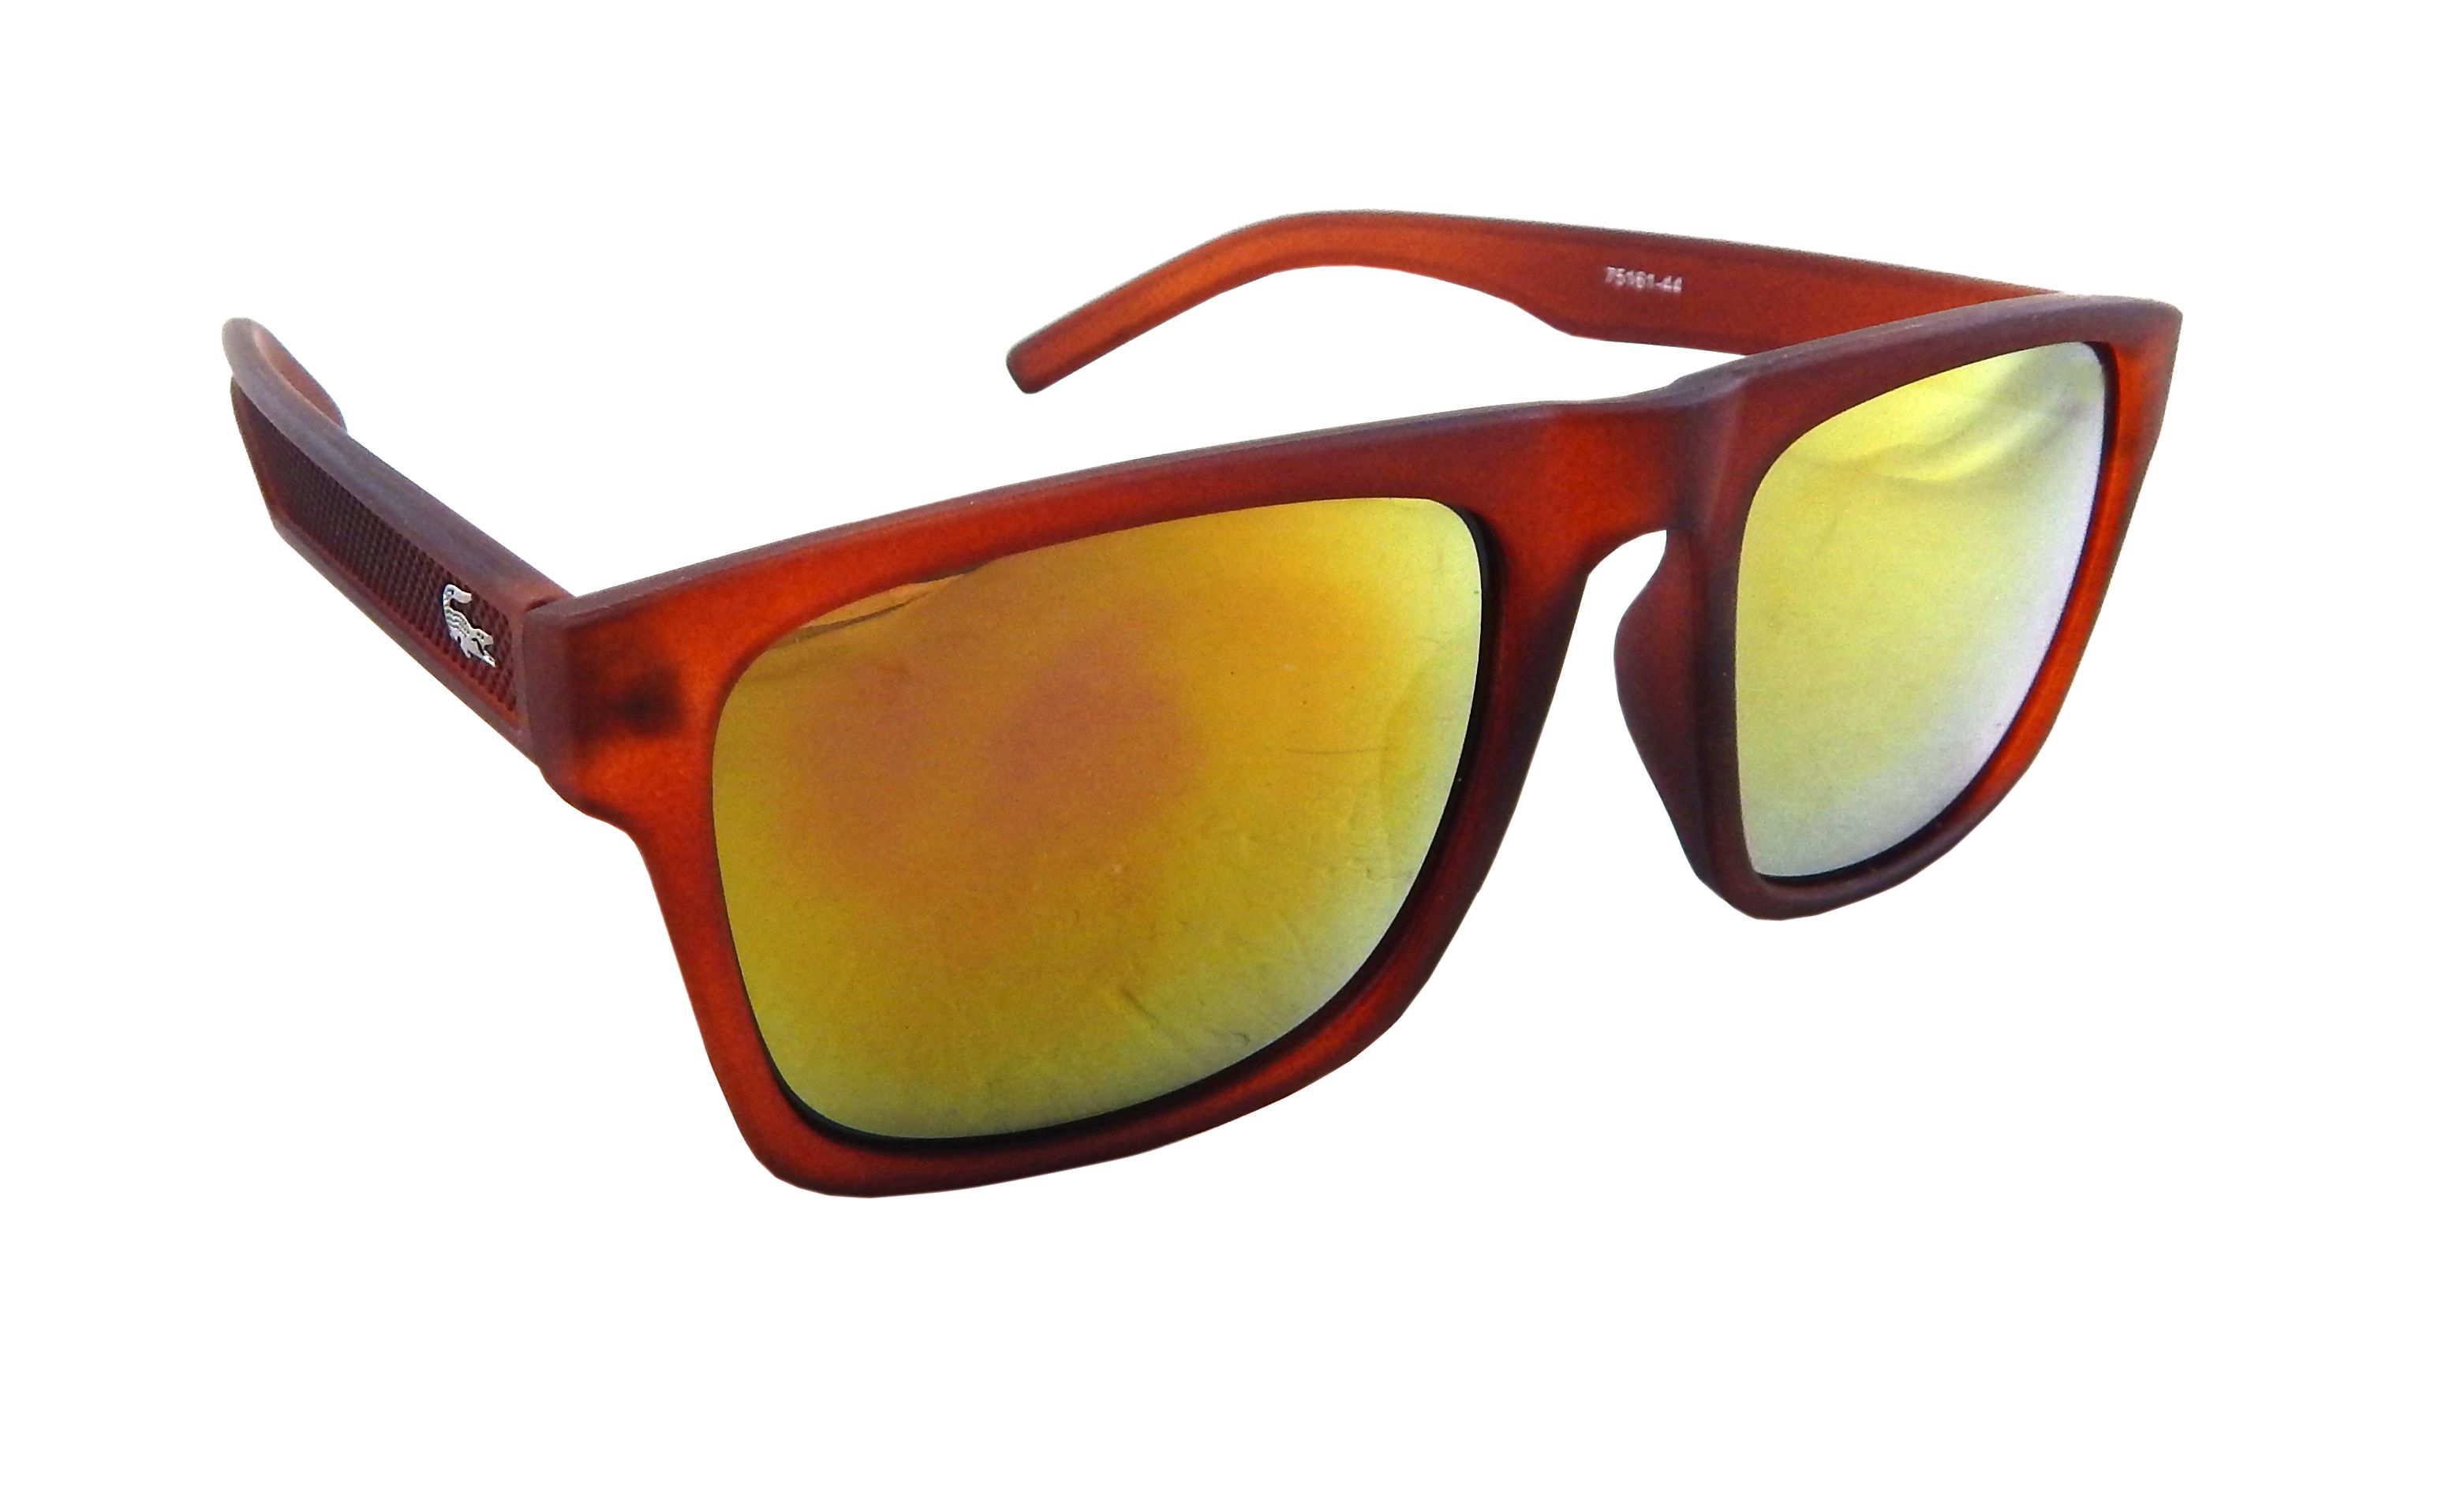 Els Multicolor Rectangle Sunglasses ( 75161-44-BRN-RDYLW-MR-M ) - Buy ...